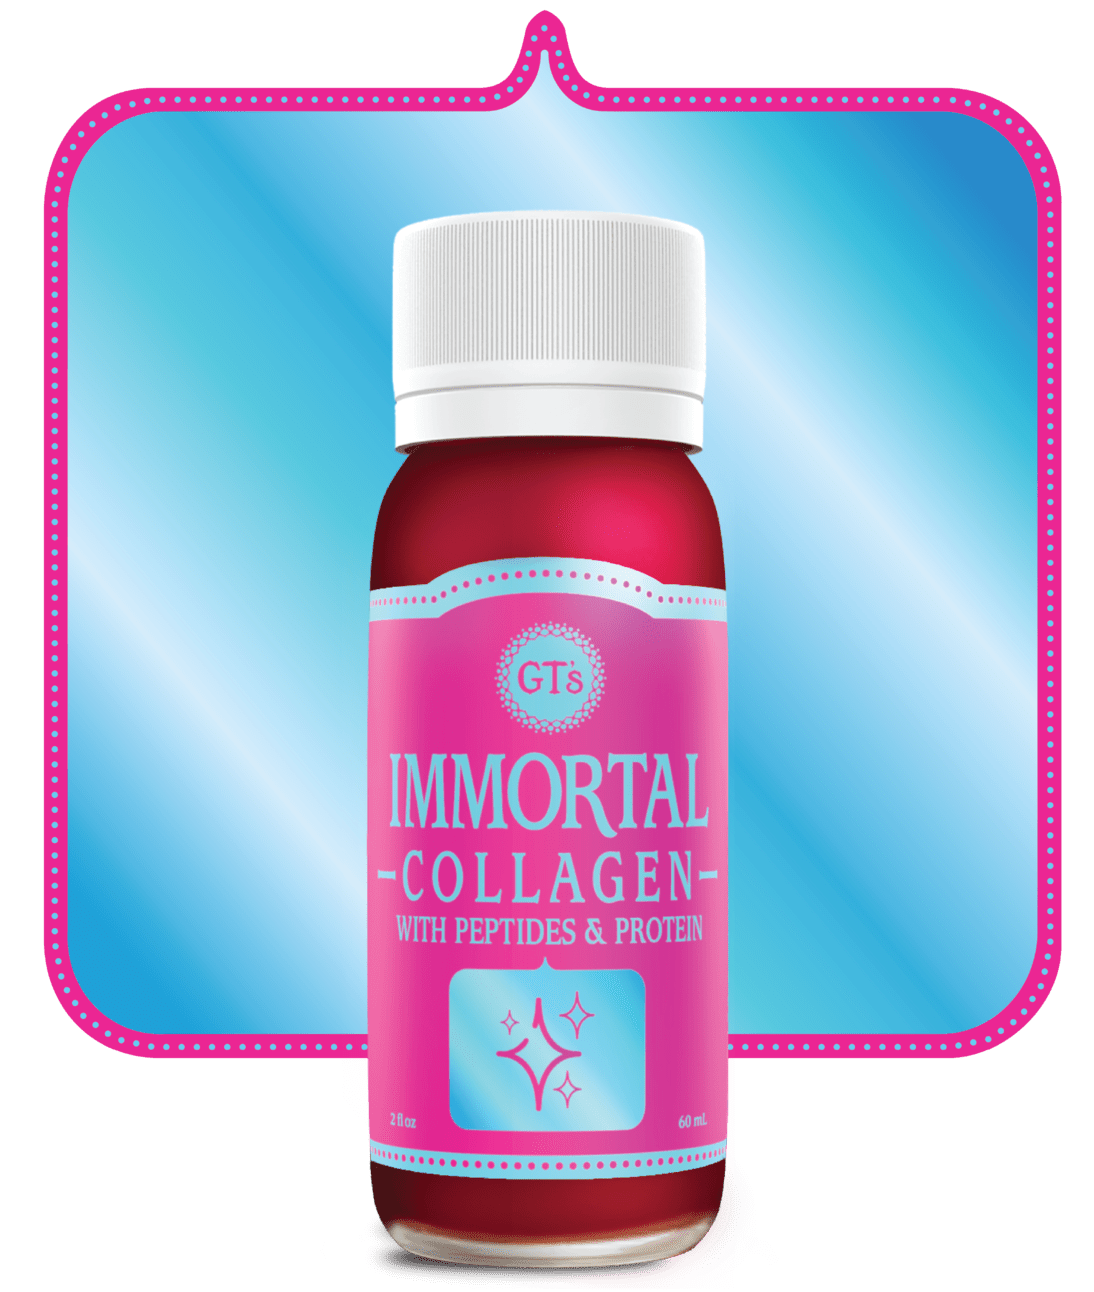 GT's IMMORTAL Collagen Bottle Render